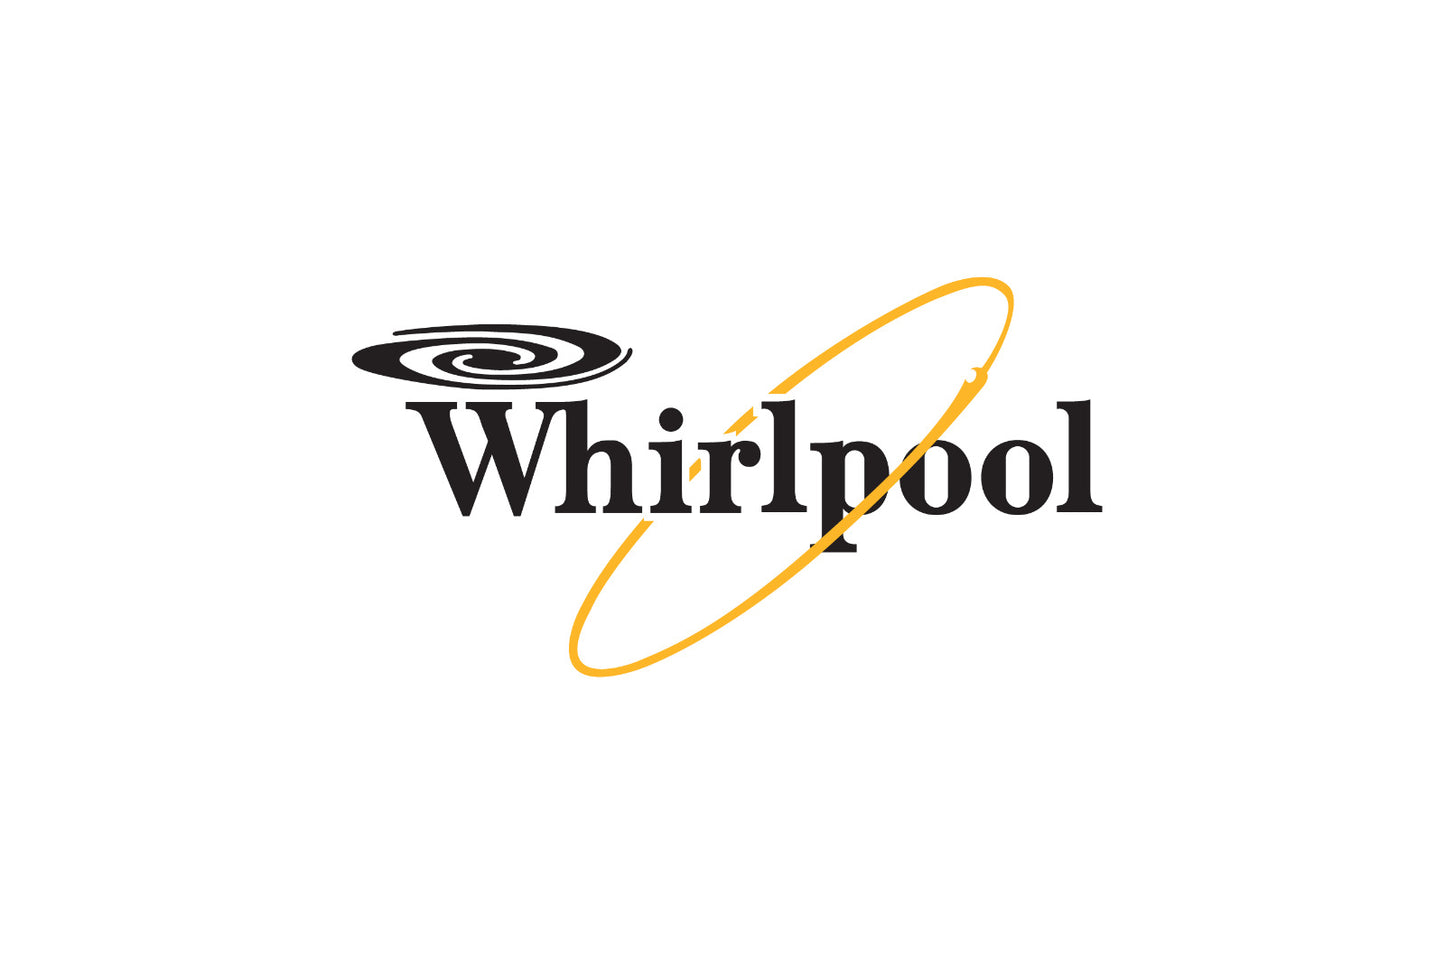 New Genuine OEM Replacement for Whirlpool Range Knob W10255424